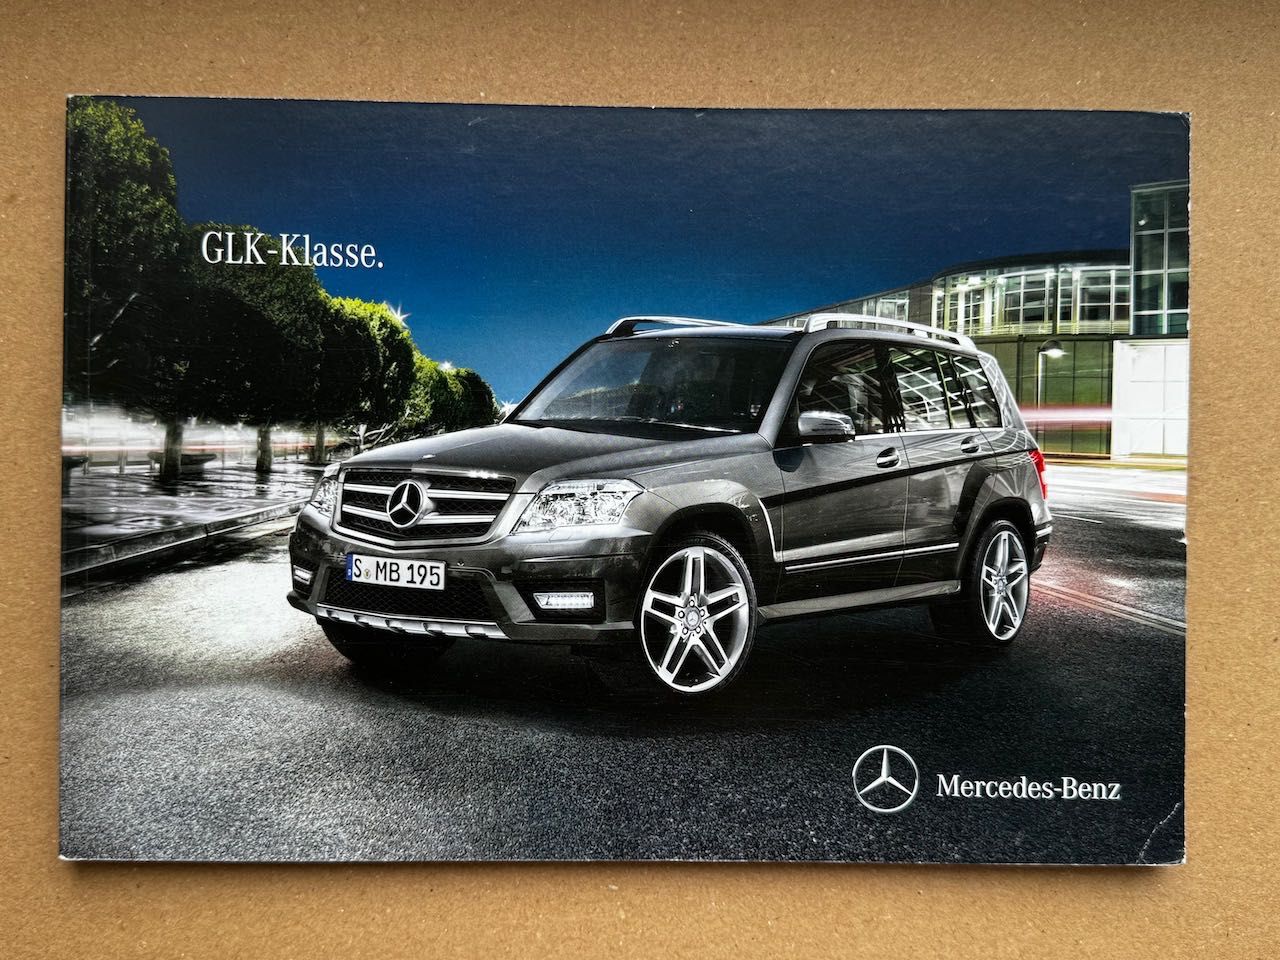 2010 / Mercedes-Benz GLK Klasse (W204) / DE / prospekt katalog